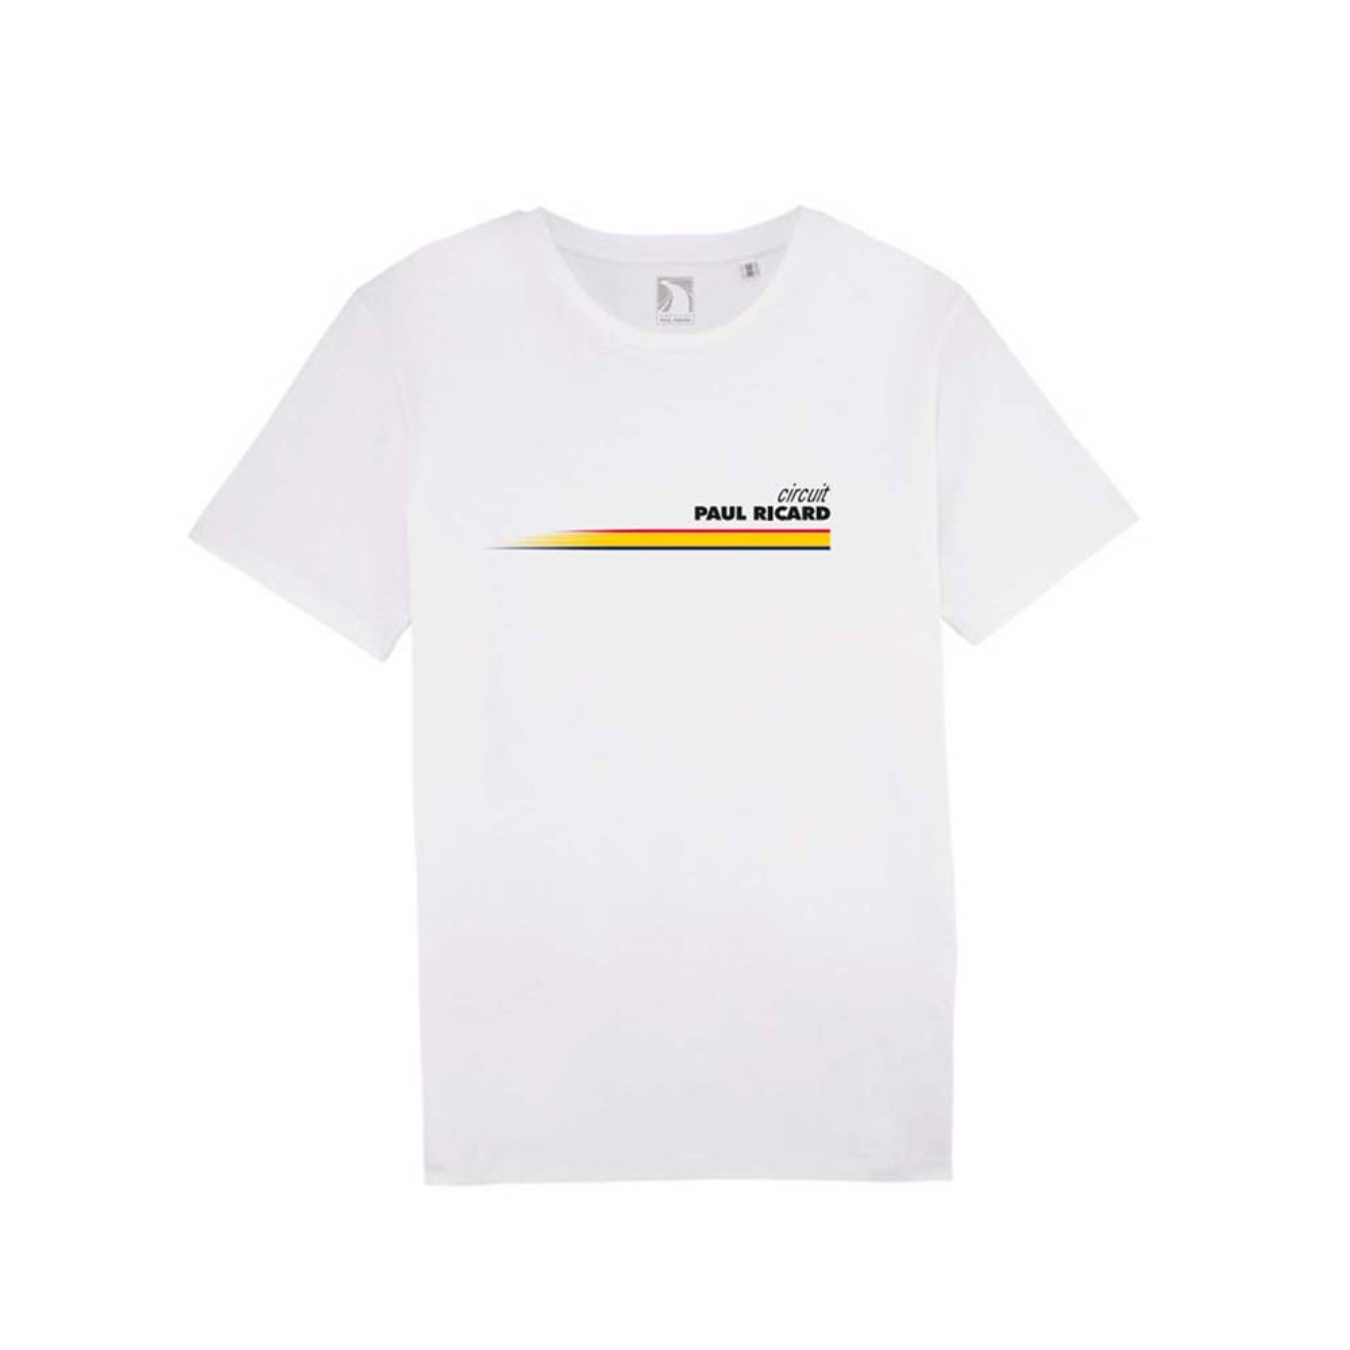 Logo FIA CIRCUIT PAUL RICARD VINTAGE Men's T-Shirt - White  